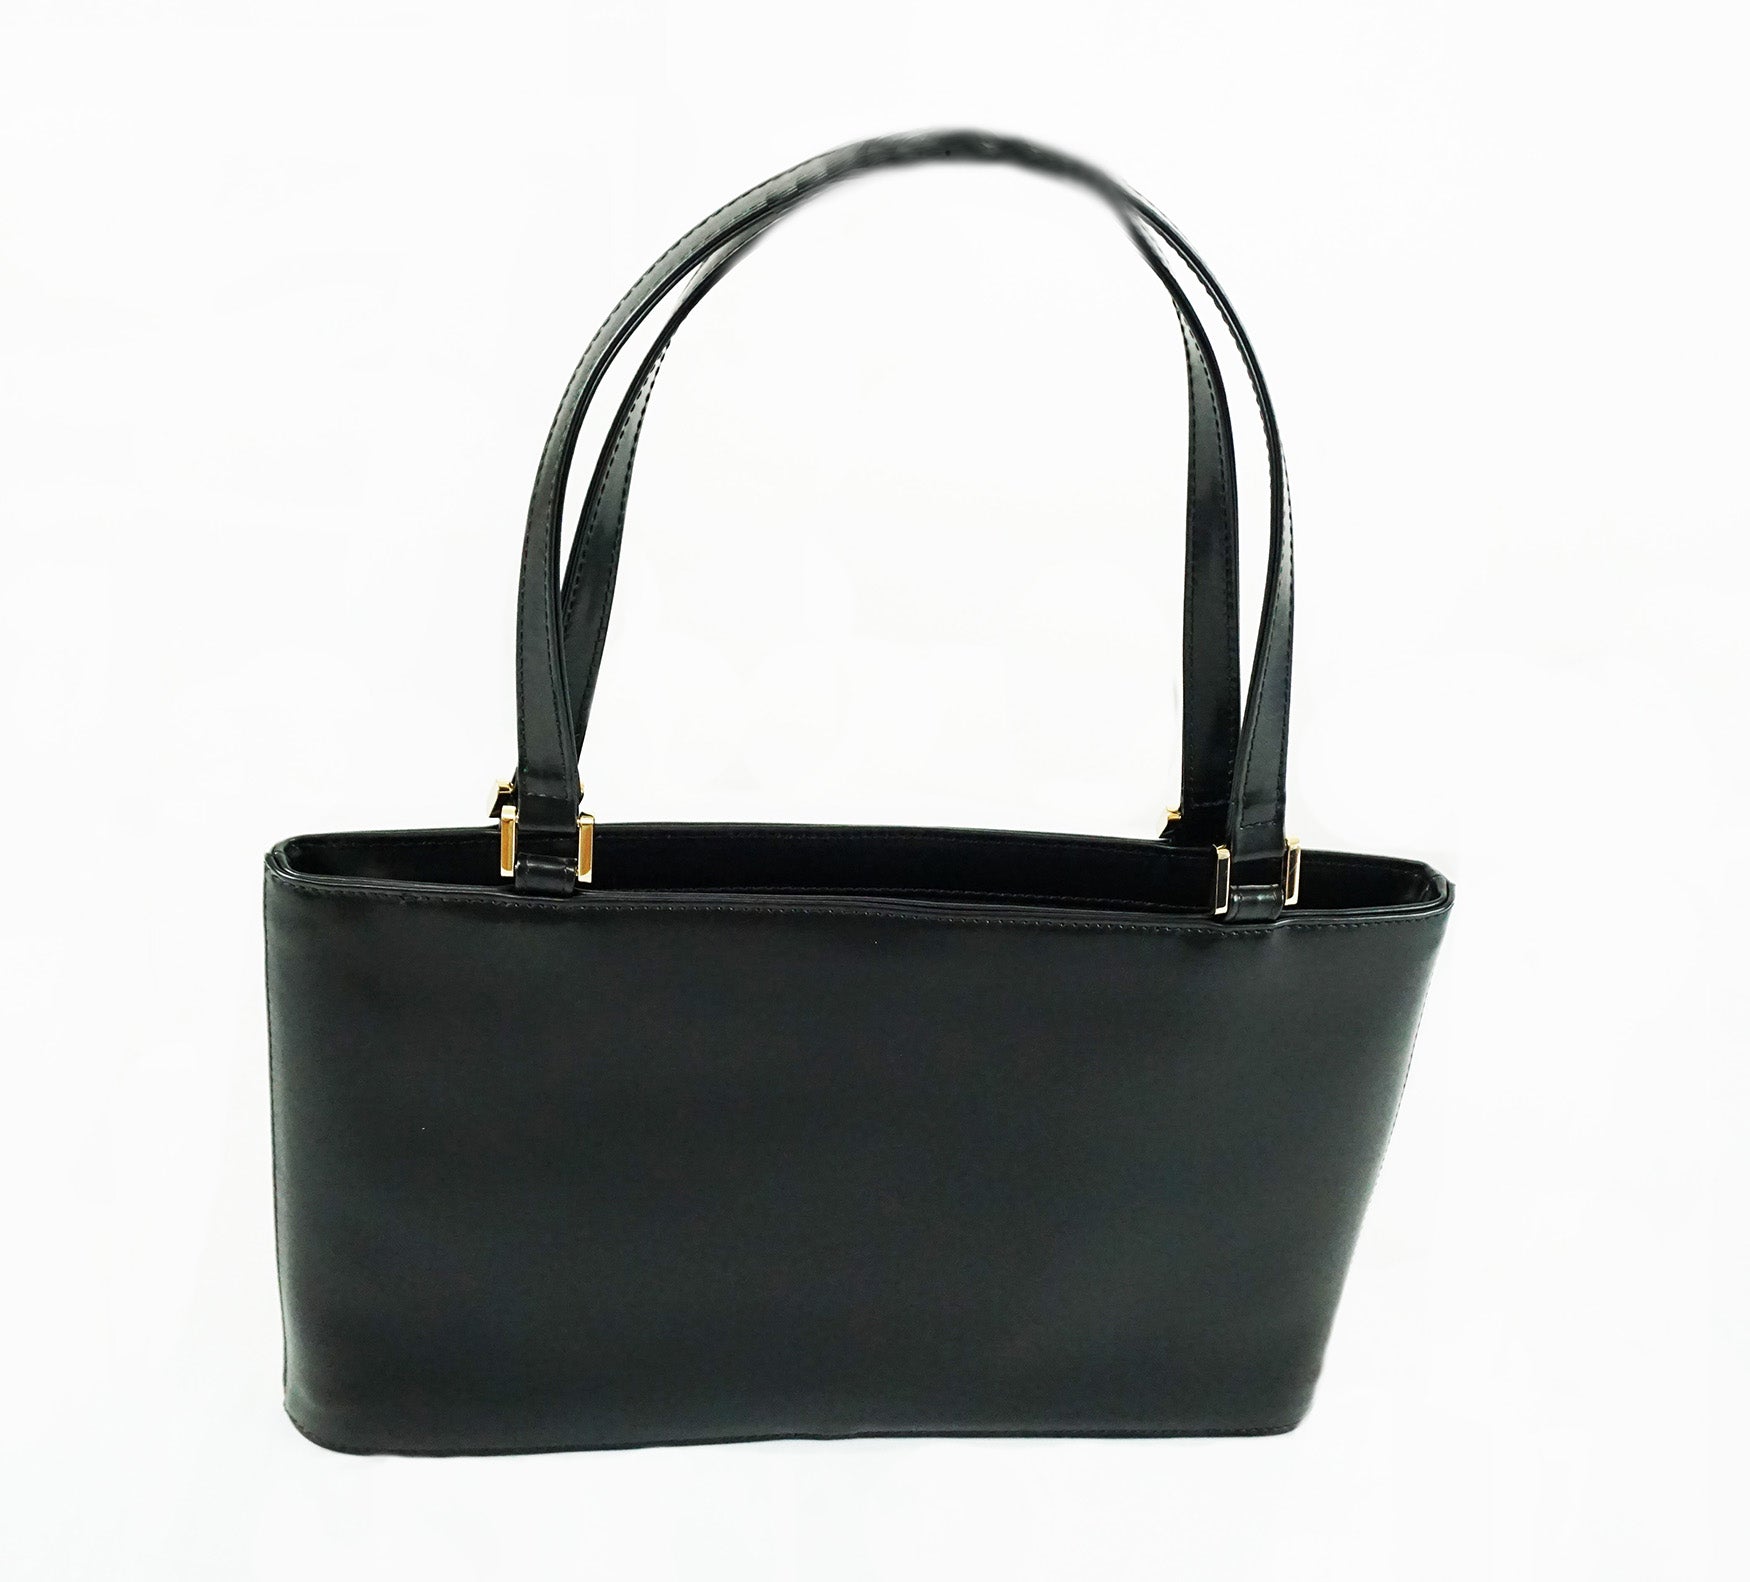 Buy dubai al style Women Black Shoulder Bag Black Online @ Best Price in  India | Flipkart.com